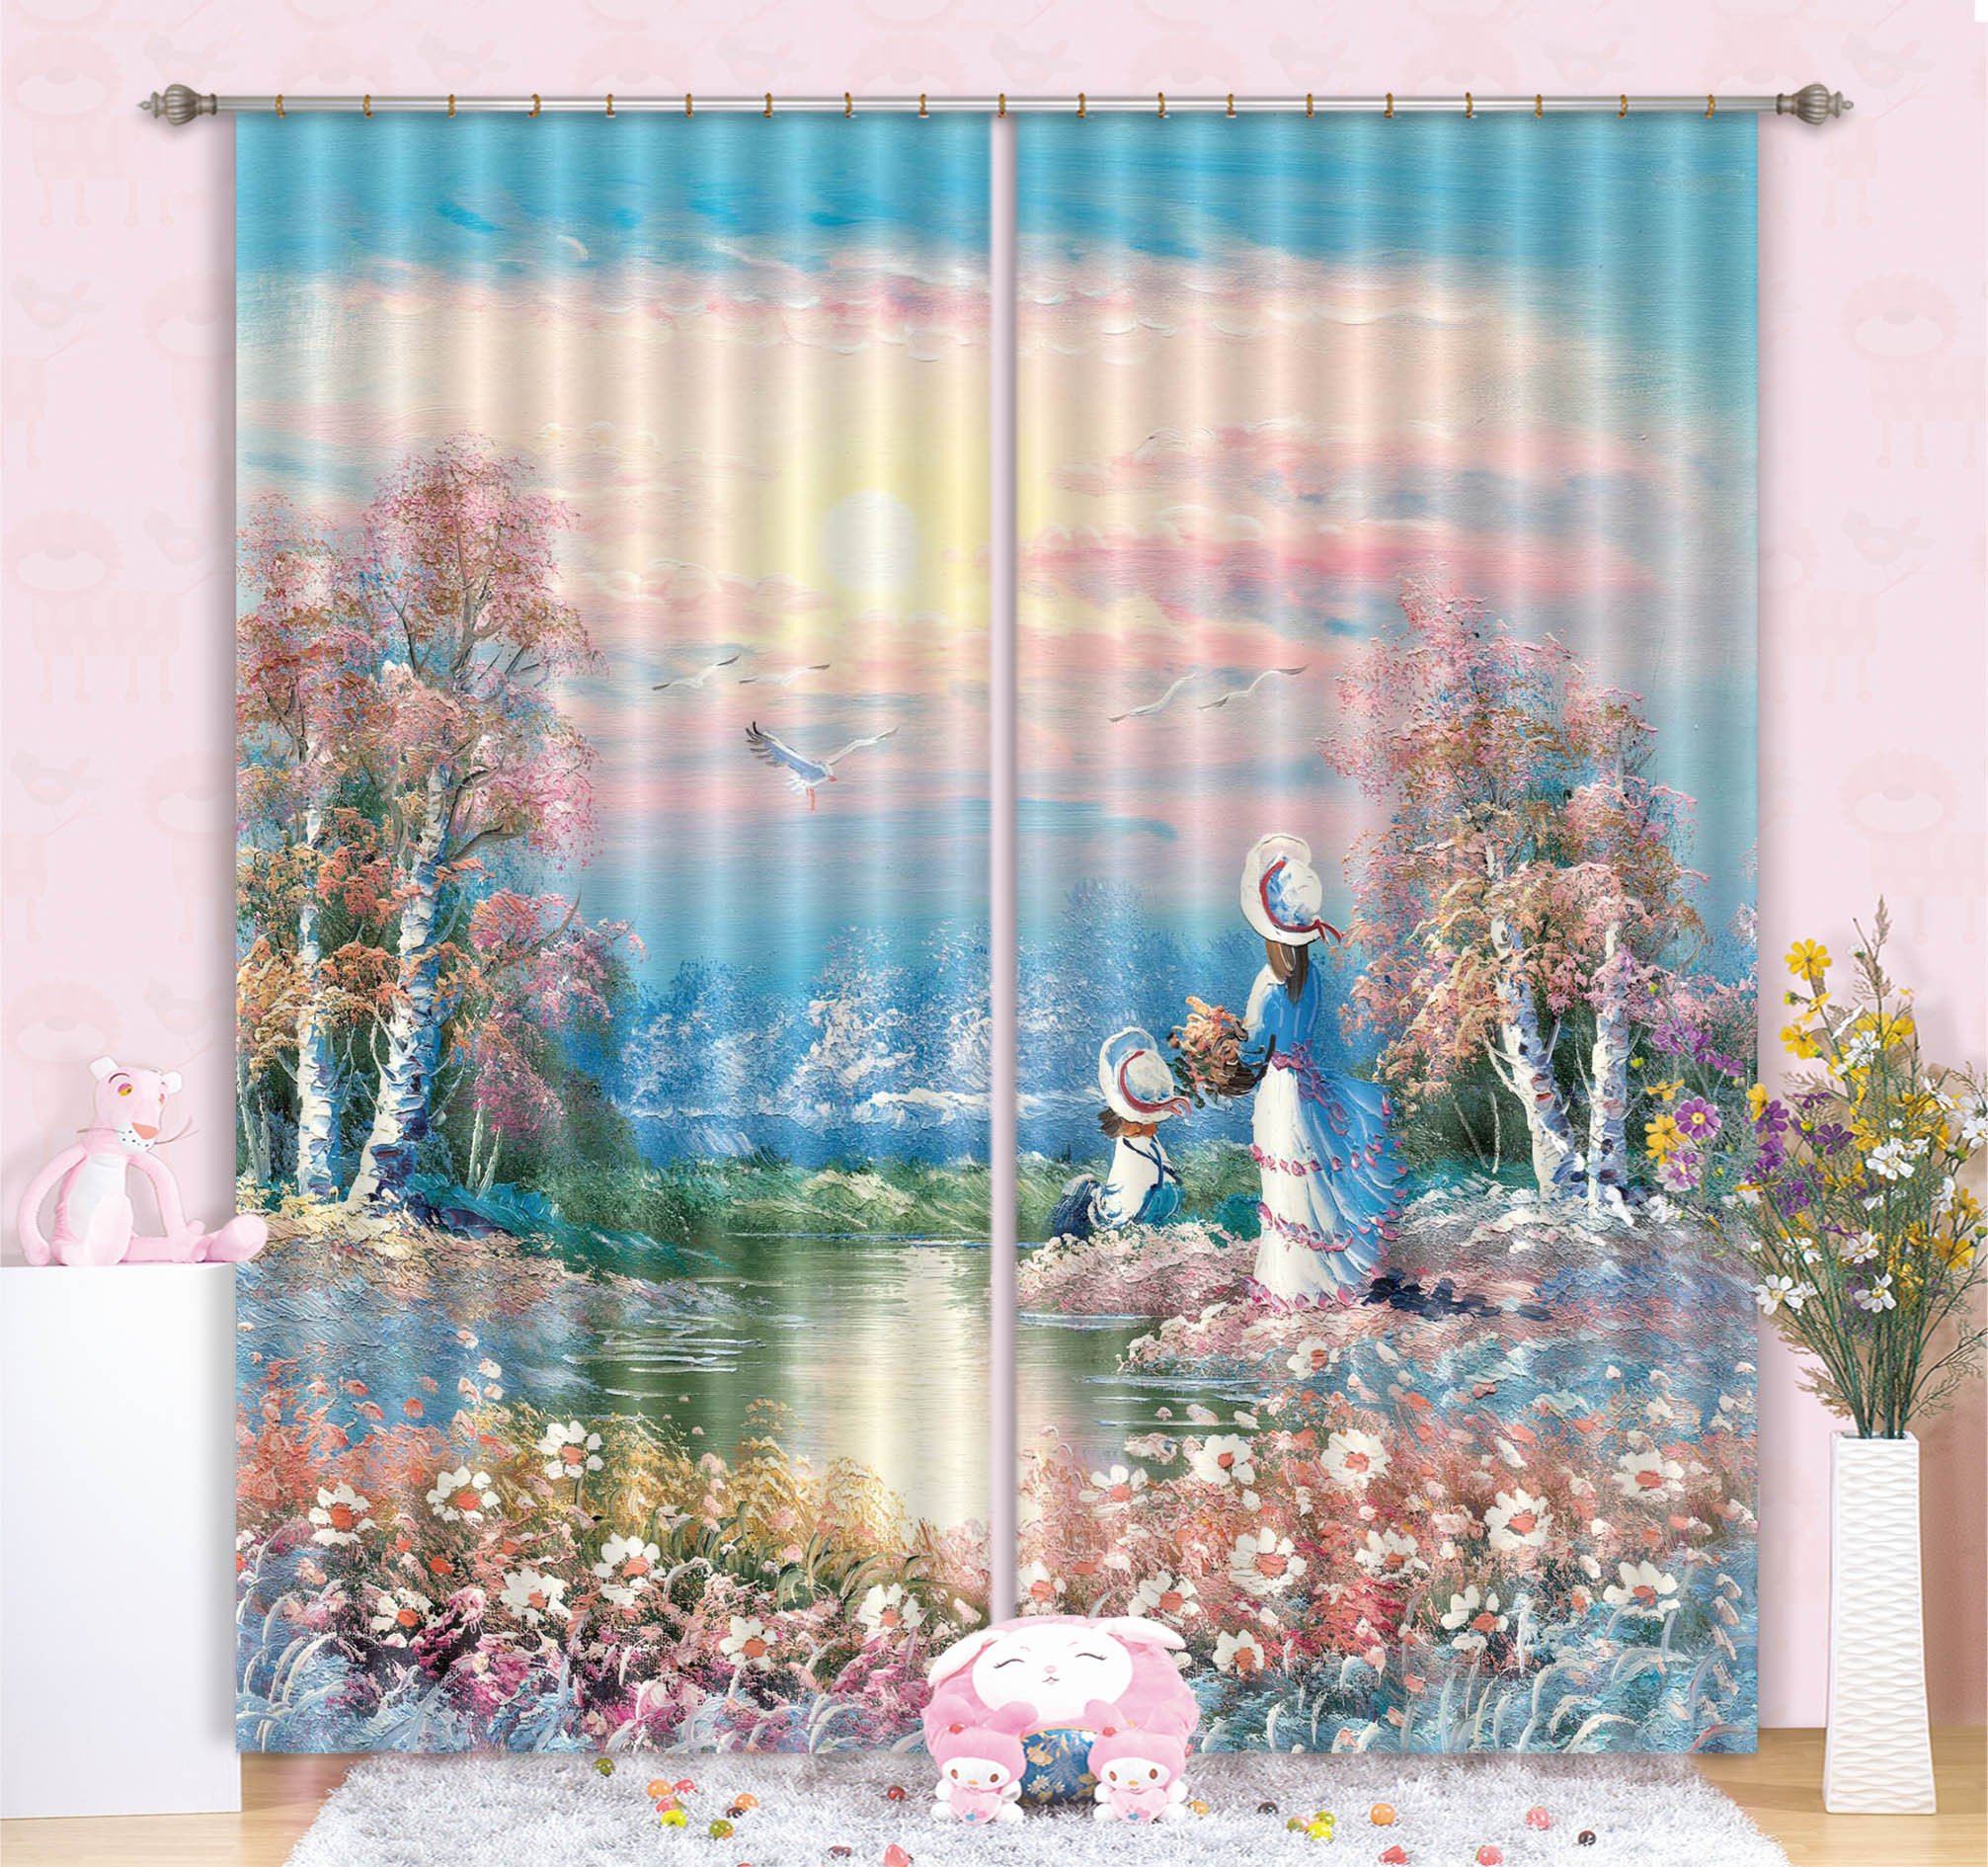 3D Girls River Scenery 243 Curtains Drapes Wallpaper AJ Wallpaper 